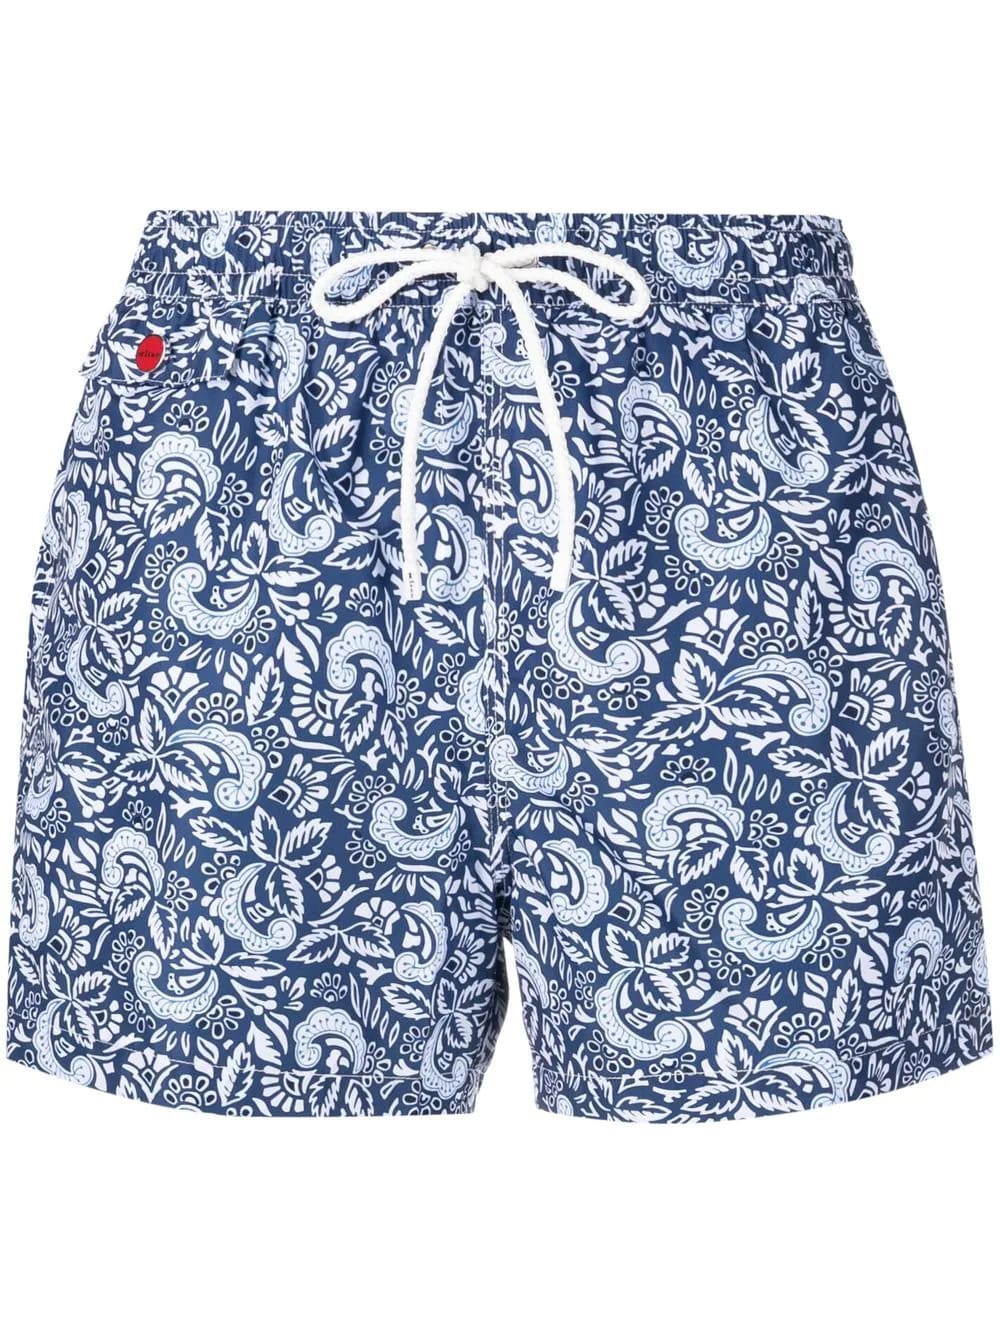 Kiton Navy Blue Swim Shorts With White Floral Paisley Print